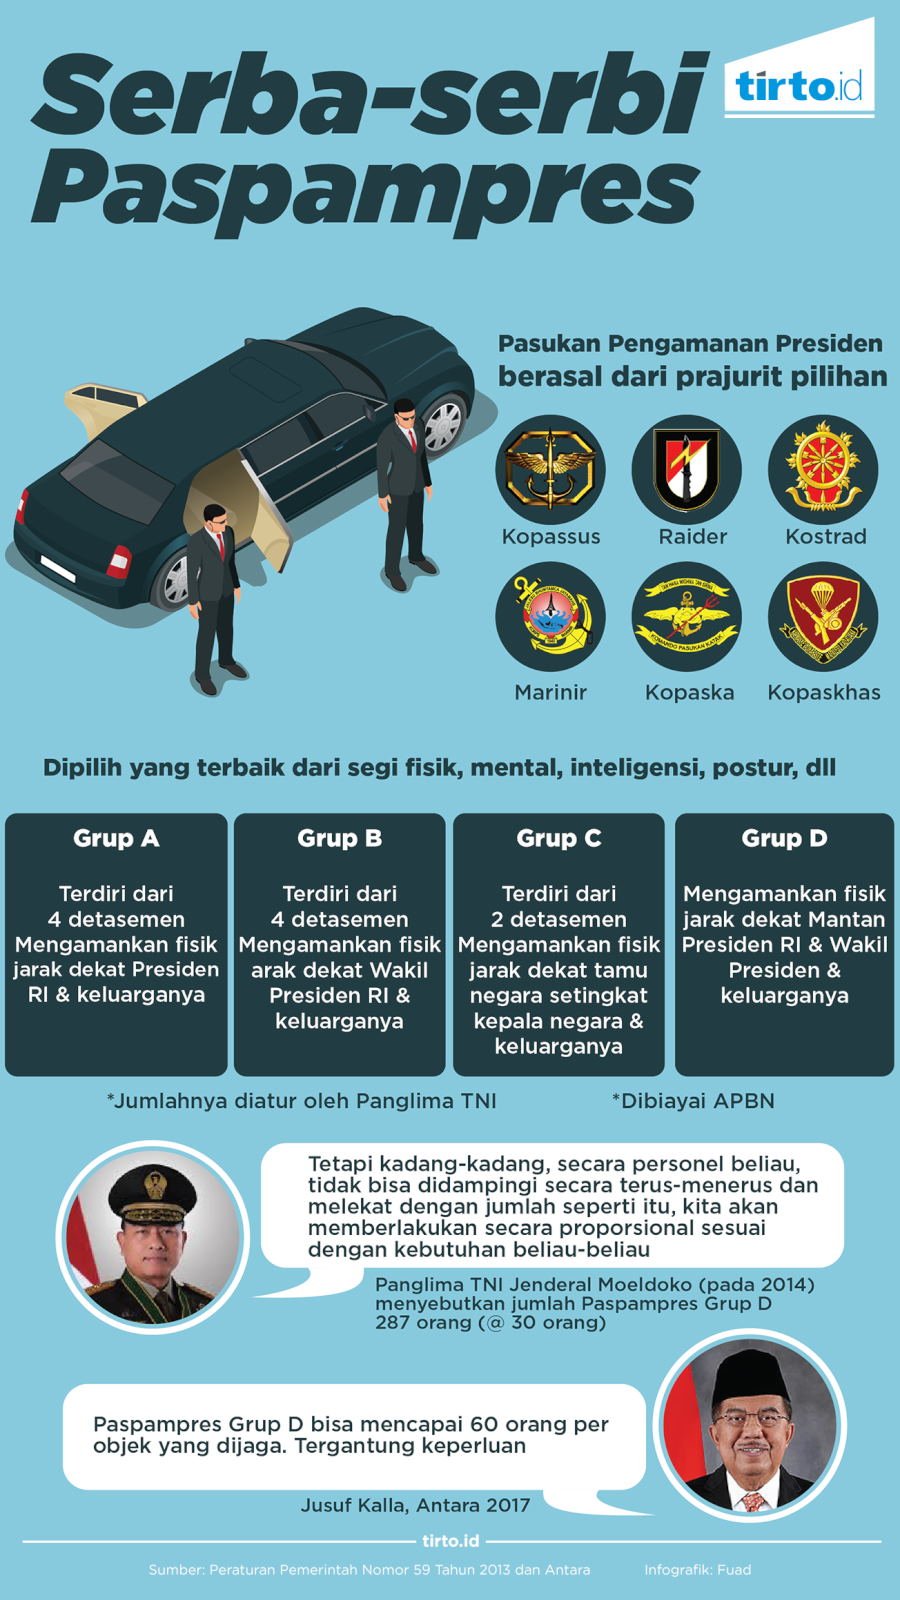 Berapa Personel Paspampres yang Kini Mengawal SBY?